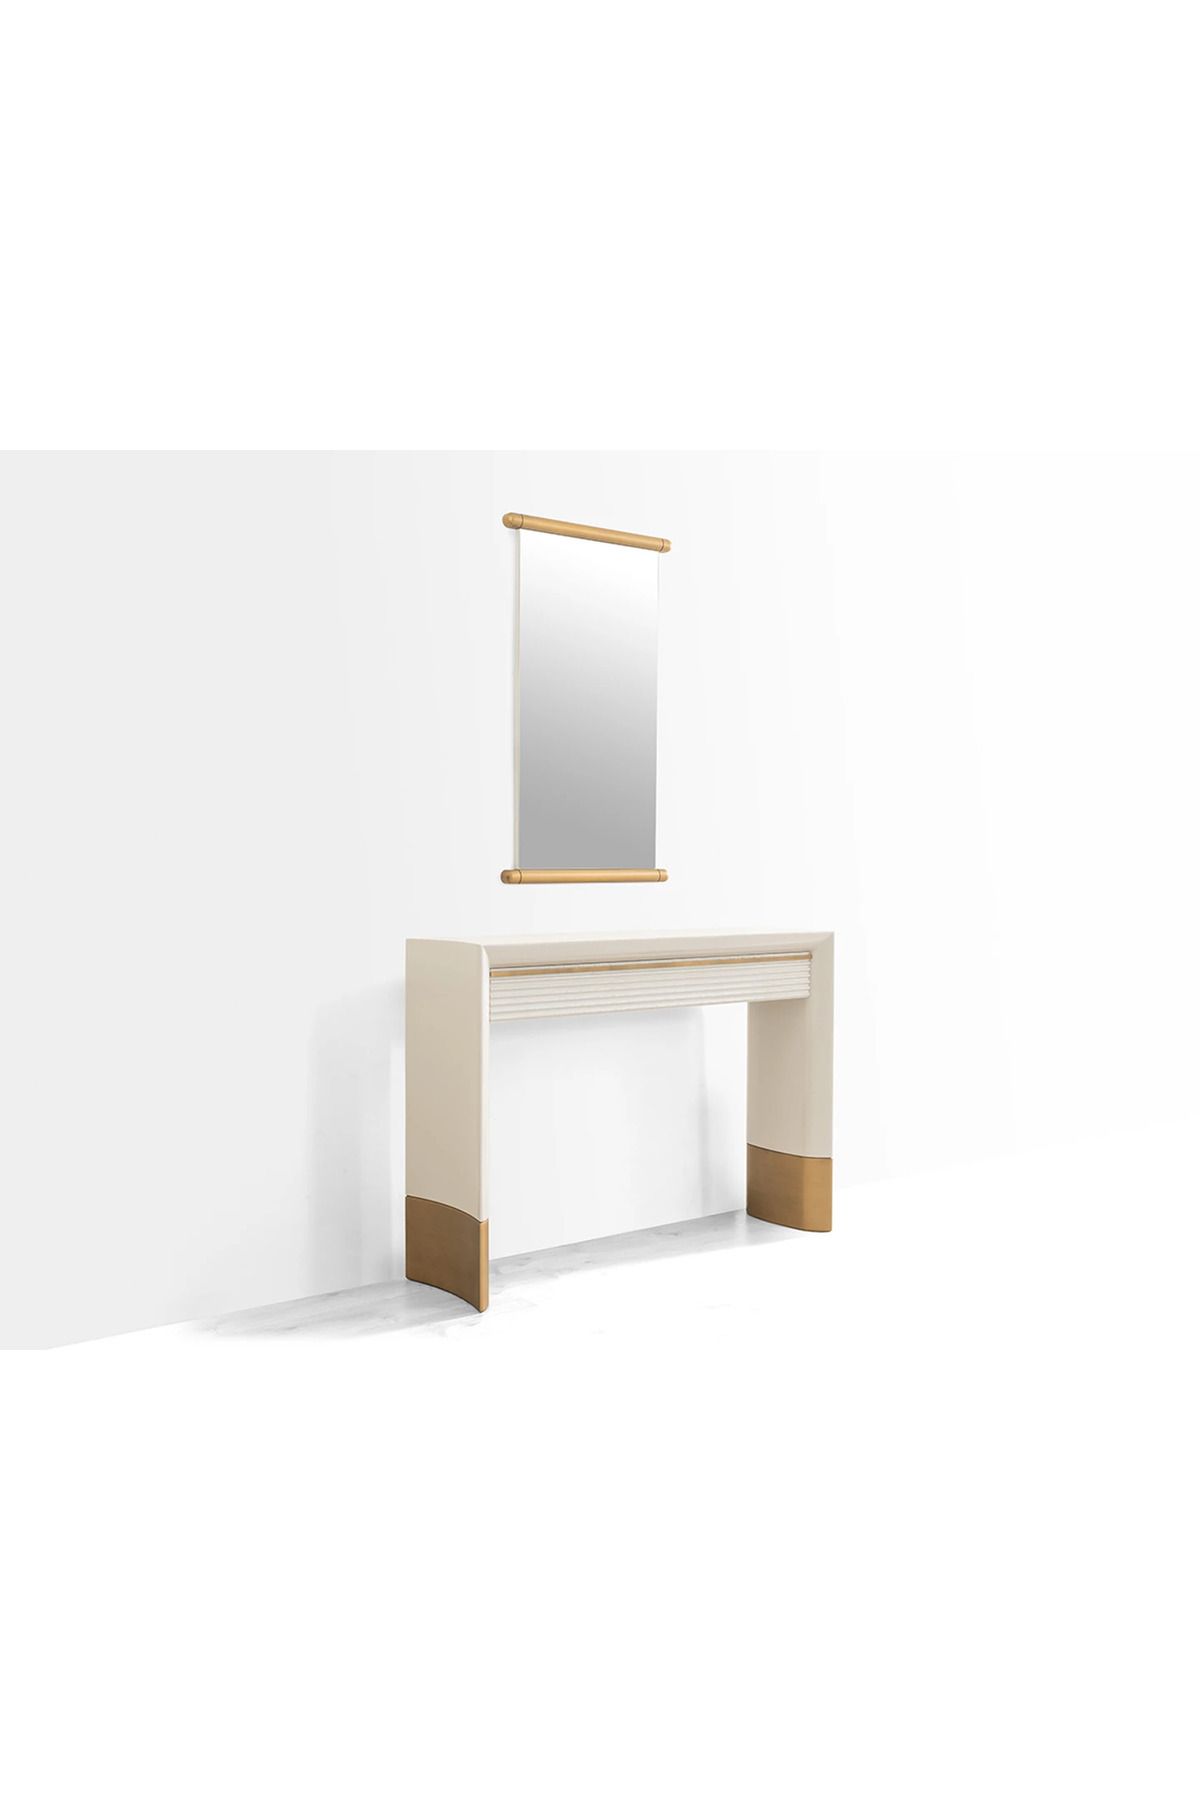 Nill's Furniture Design Laly Dresuar